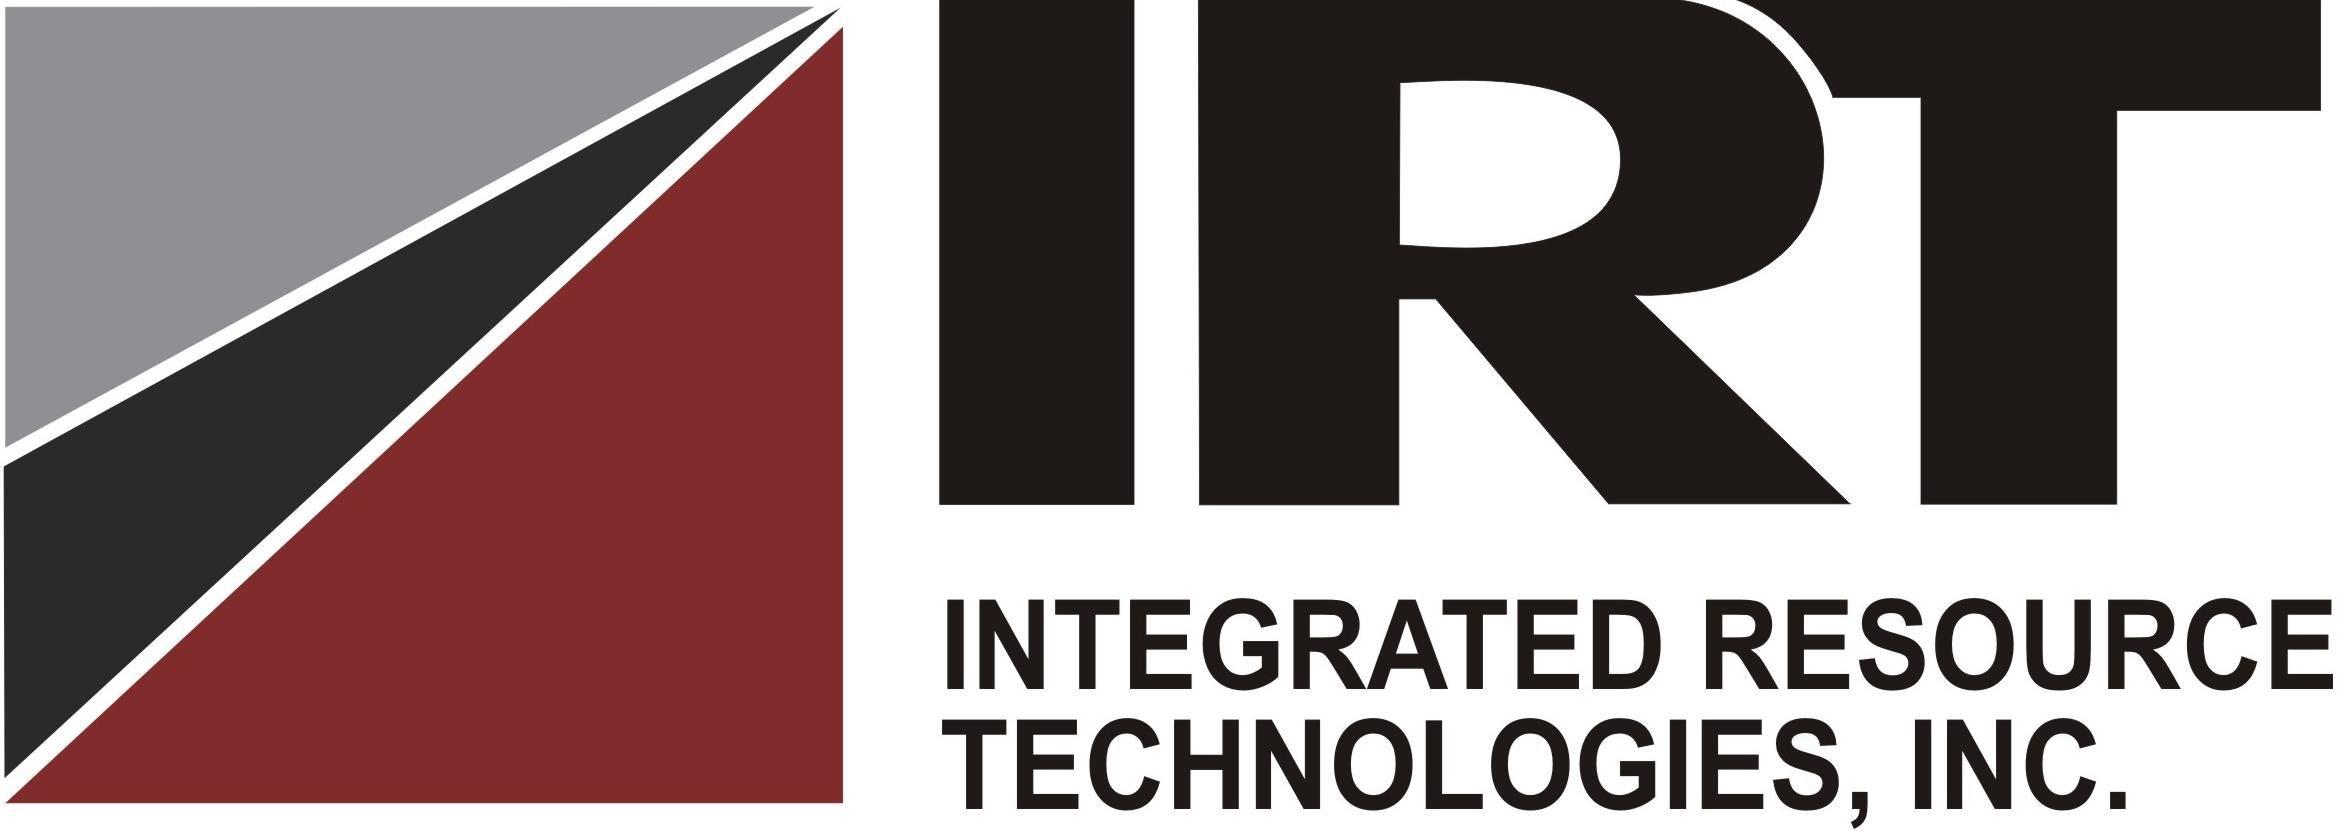 IRT Logo - IRT Home Page